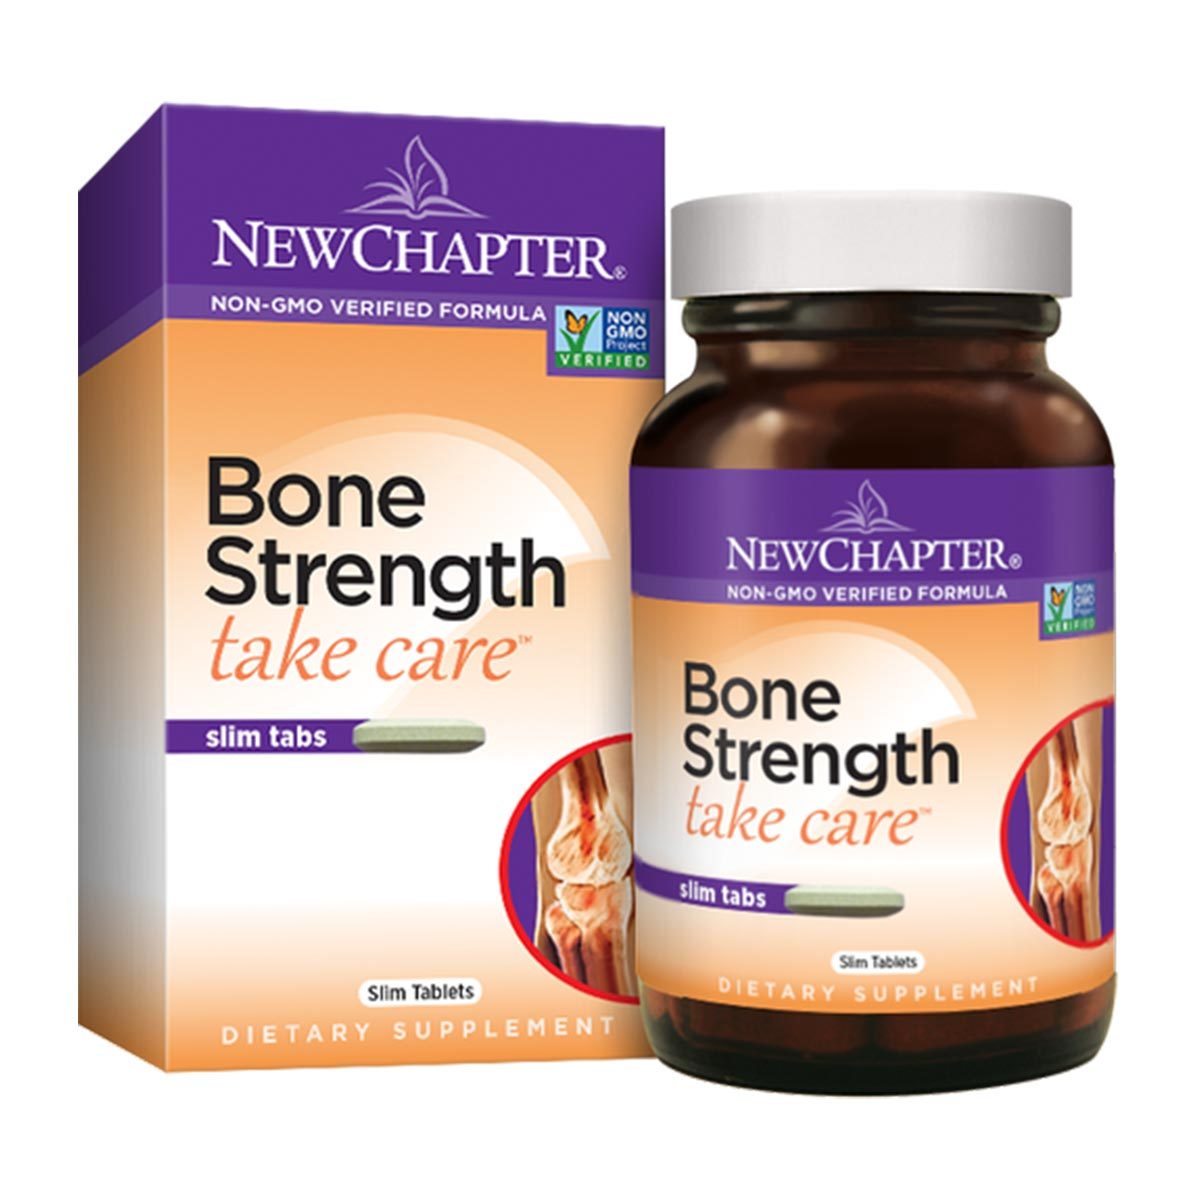 Primary image of Bone Strength Take Care Slim Tabs